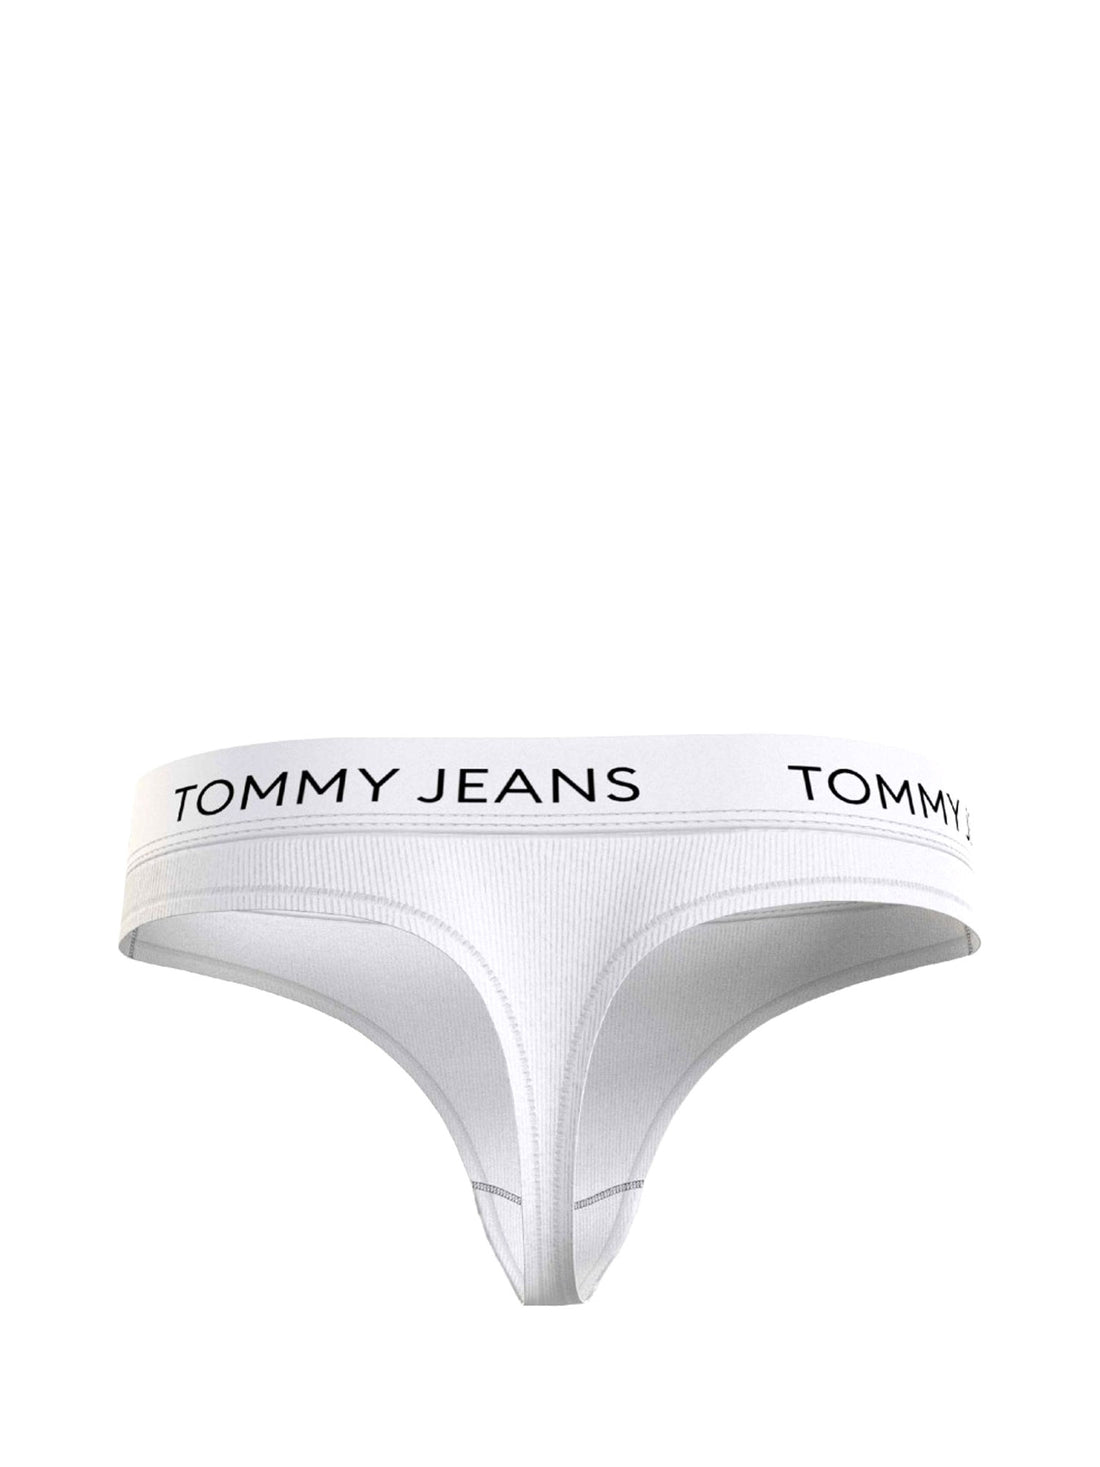 Perizomi Bianco Tommy Hilfiger Underwear